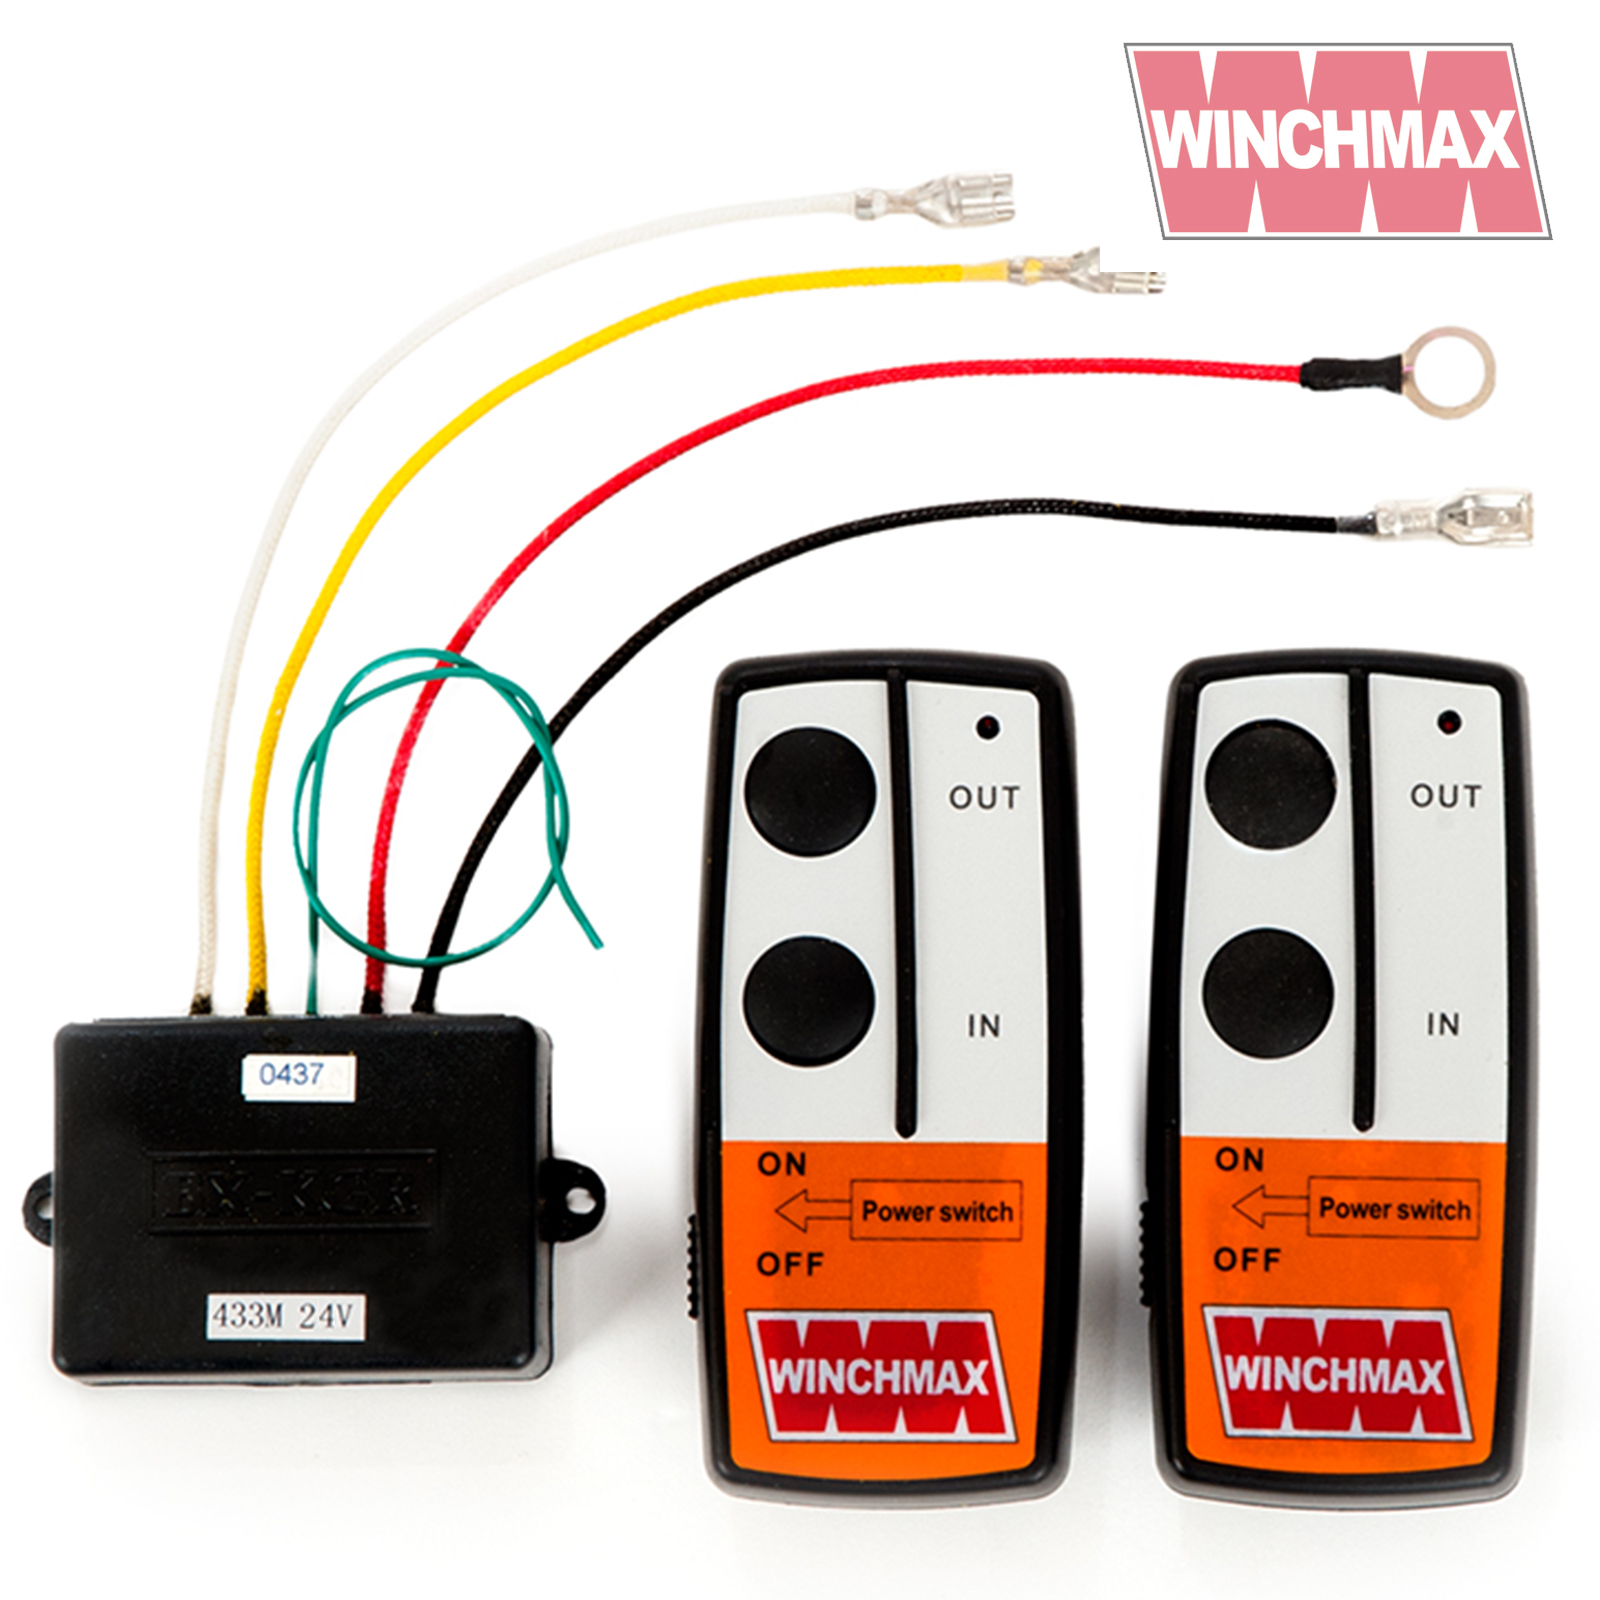 WINCHMAX 24v Wireless Remote Control Kit